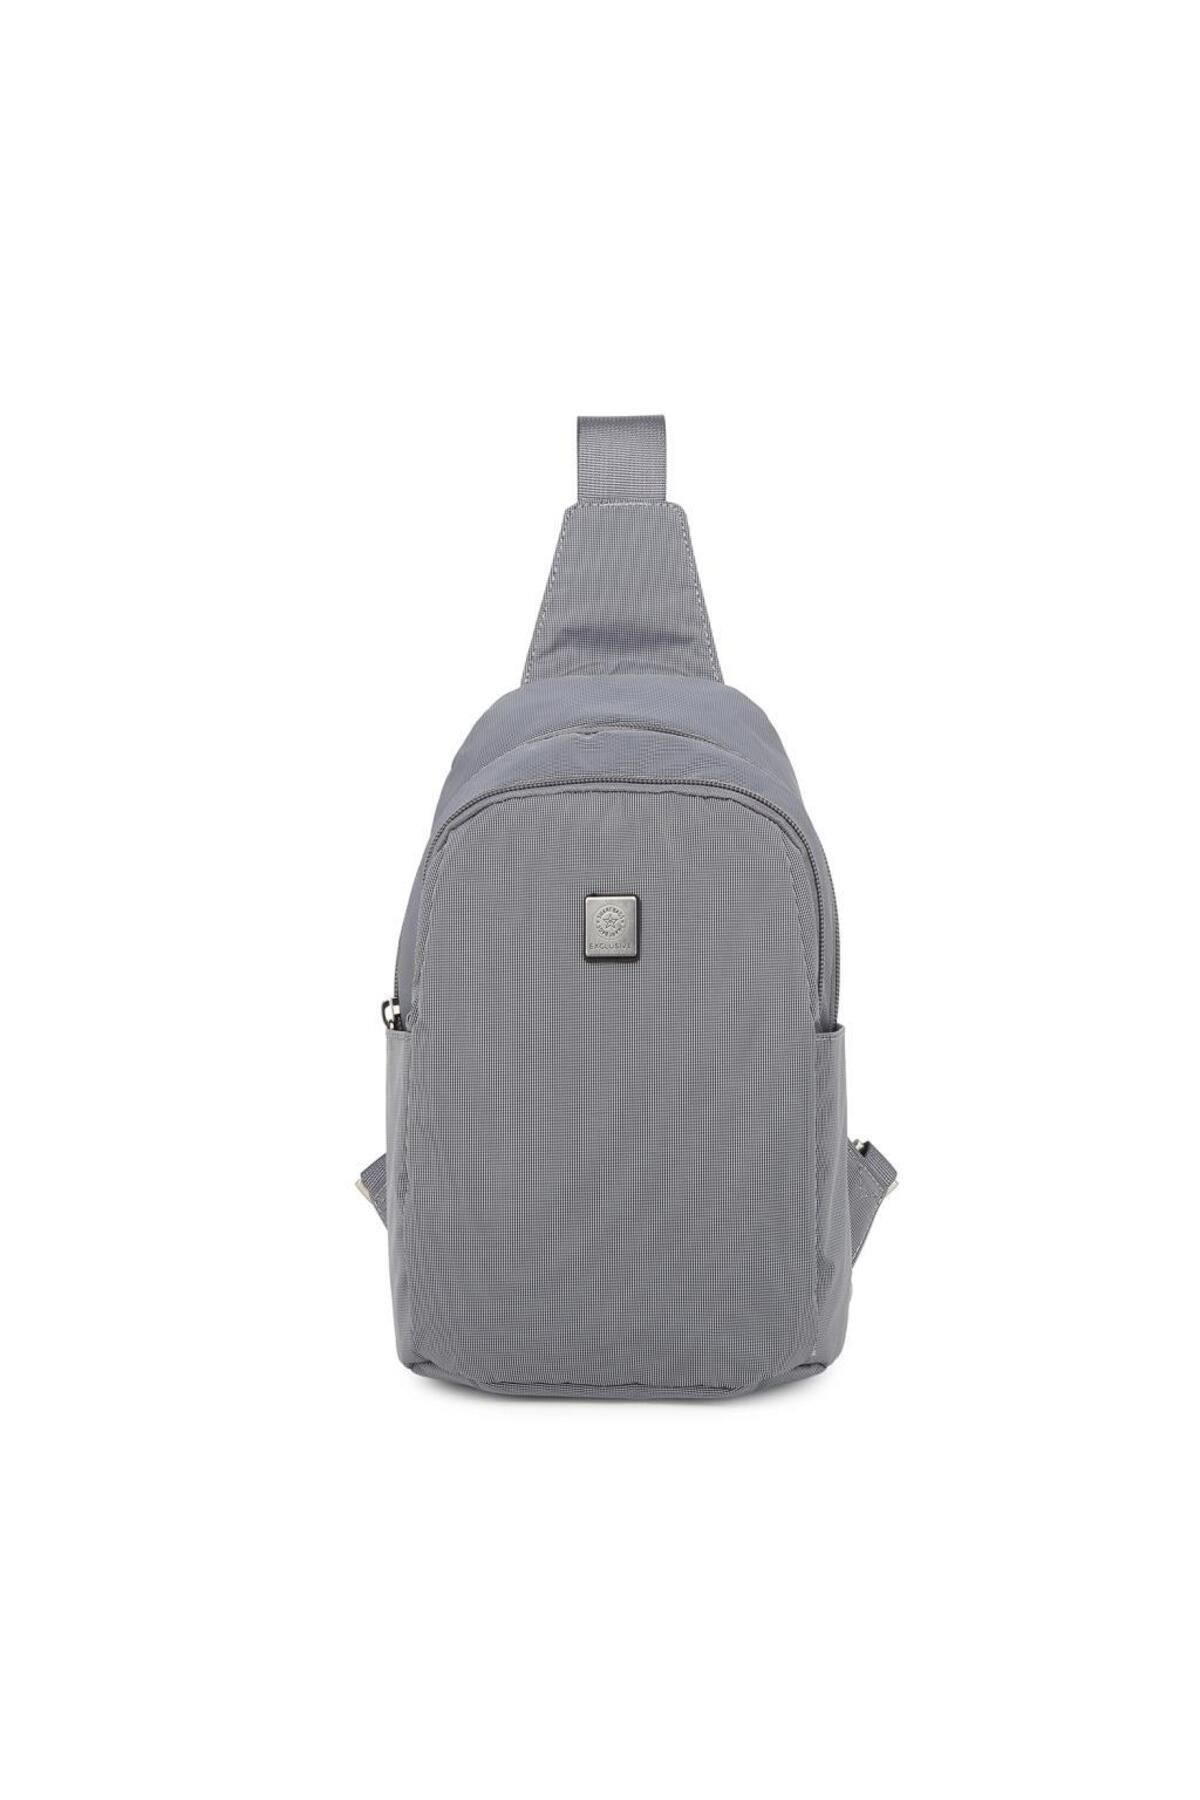 Smart Bags Exclusive Serisi Uniseks Bodybag Omuz Çantası Smart Bags 8733